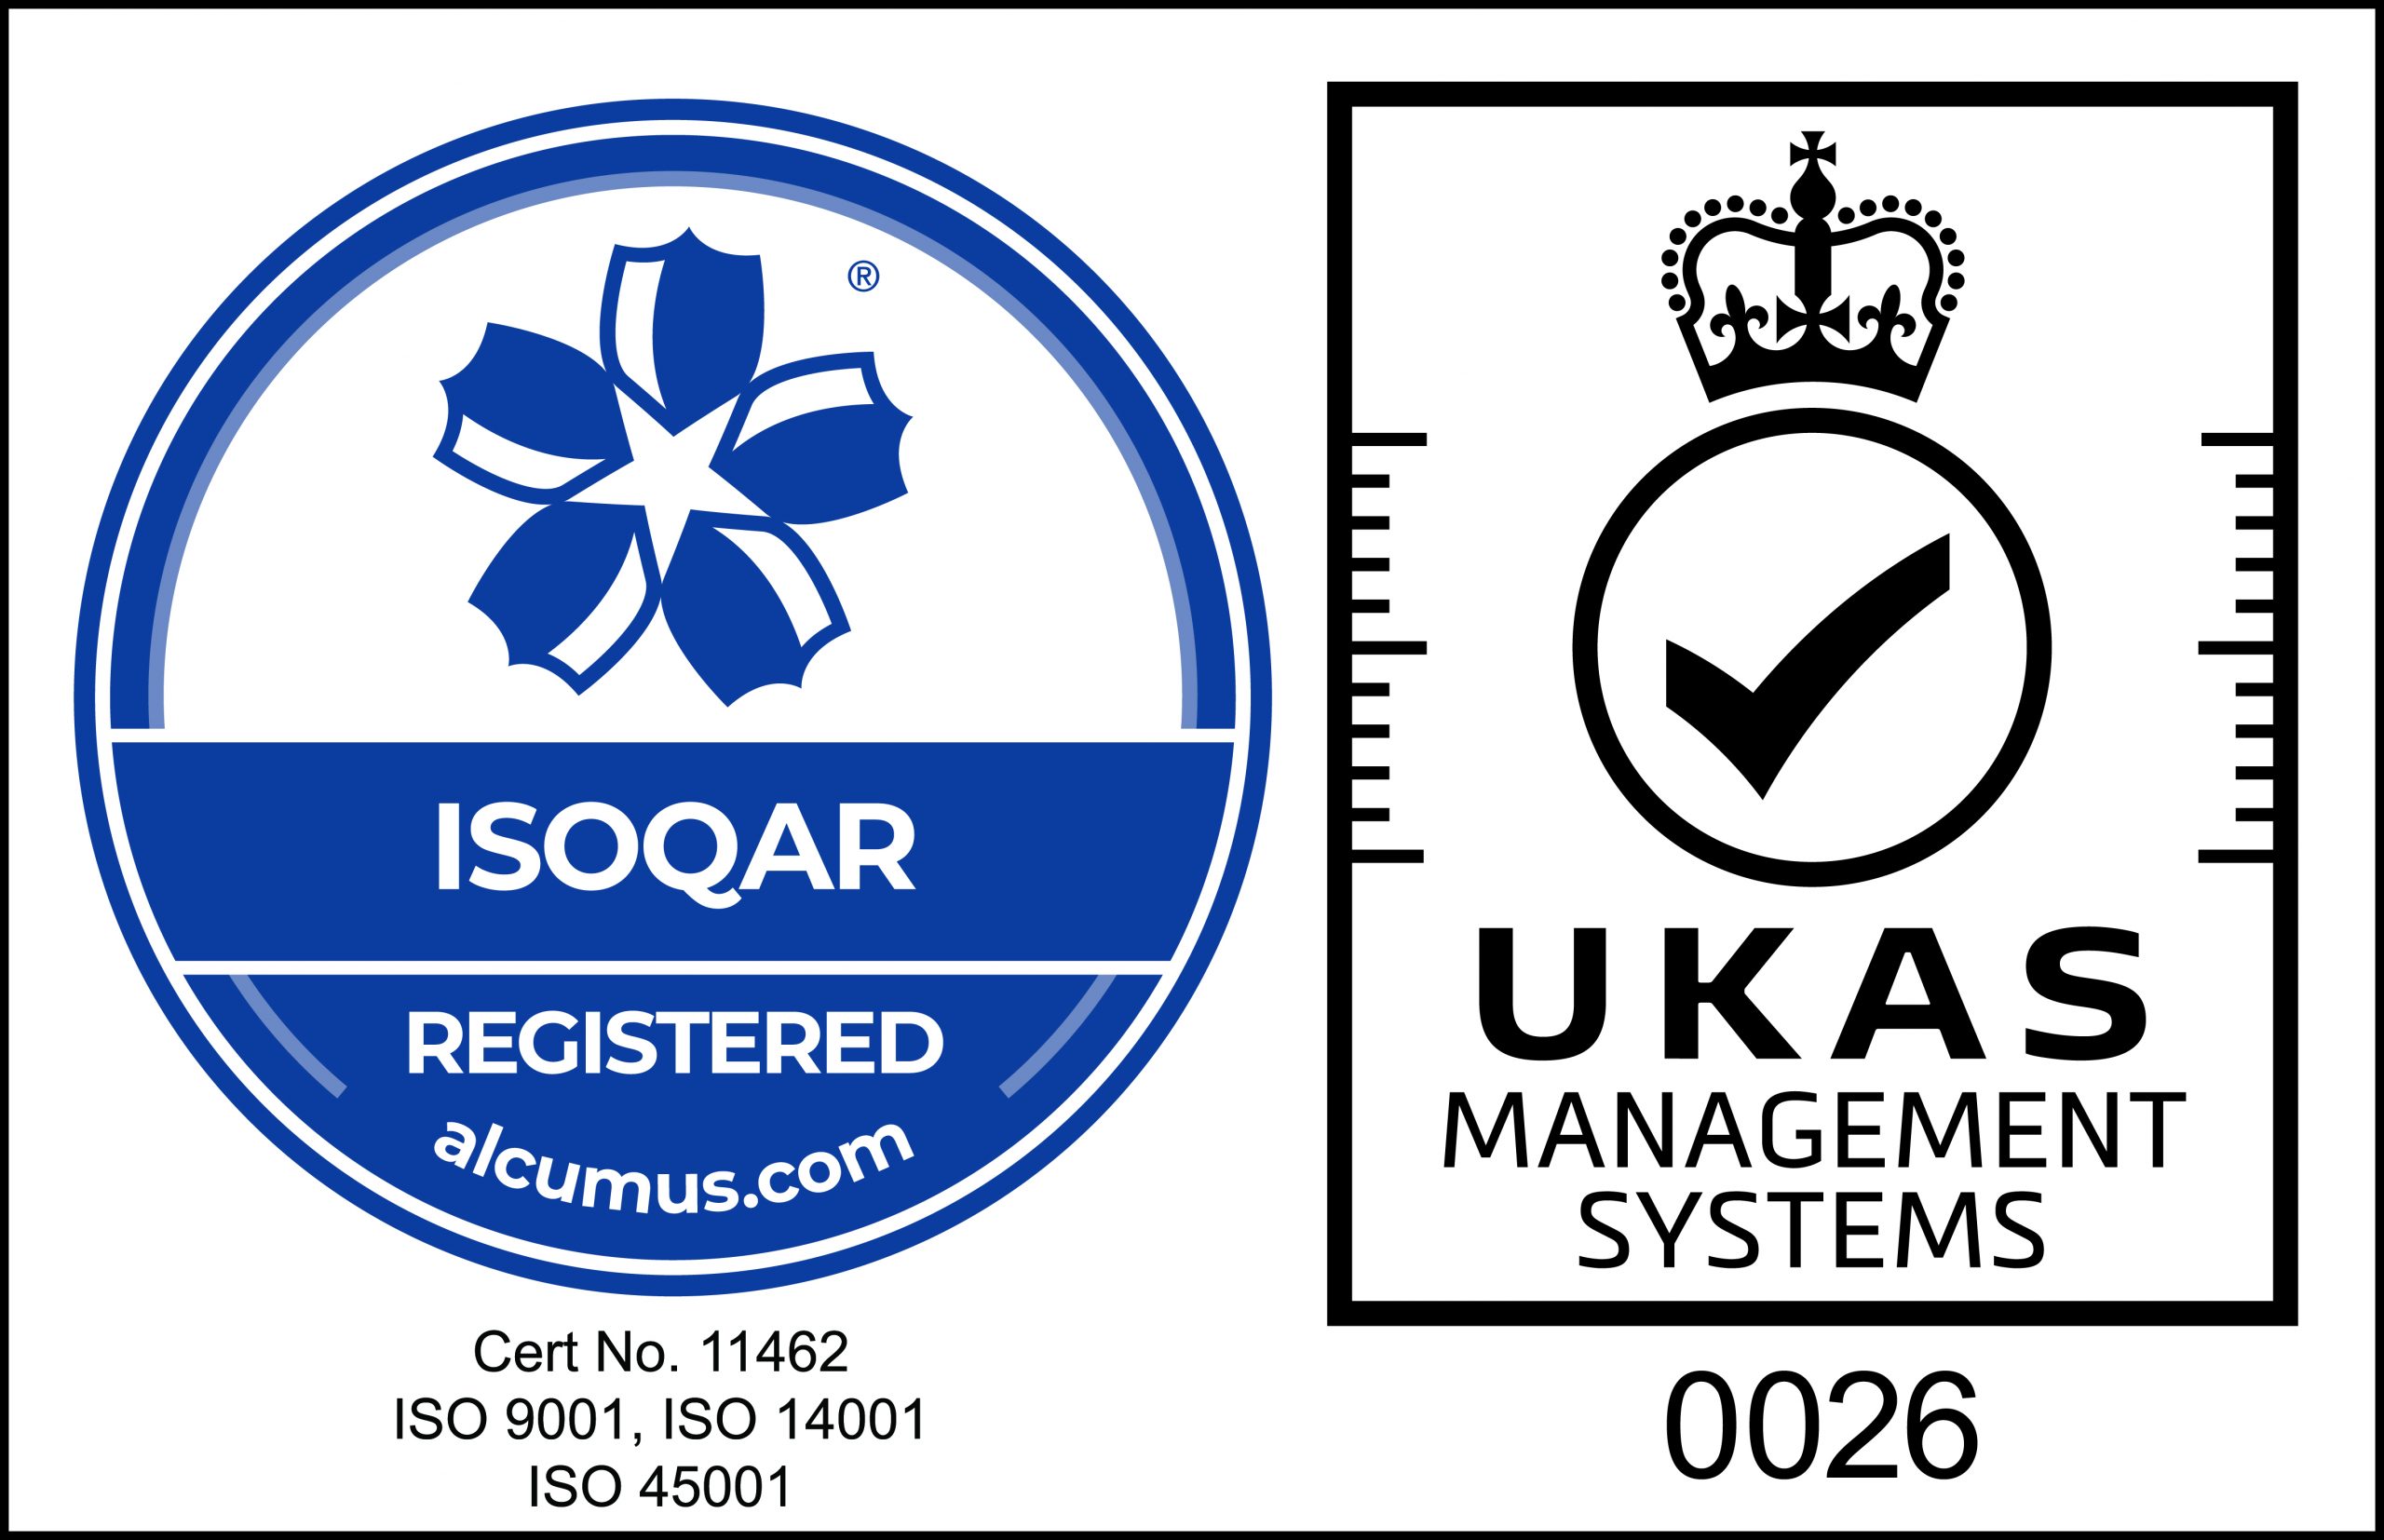 ISOQAR registered